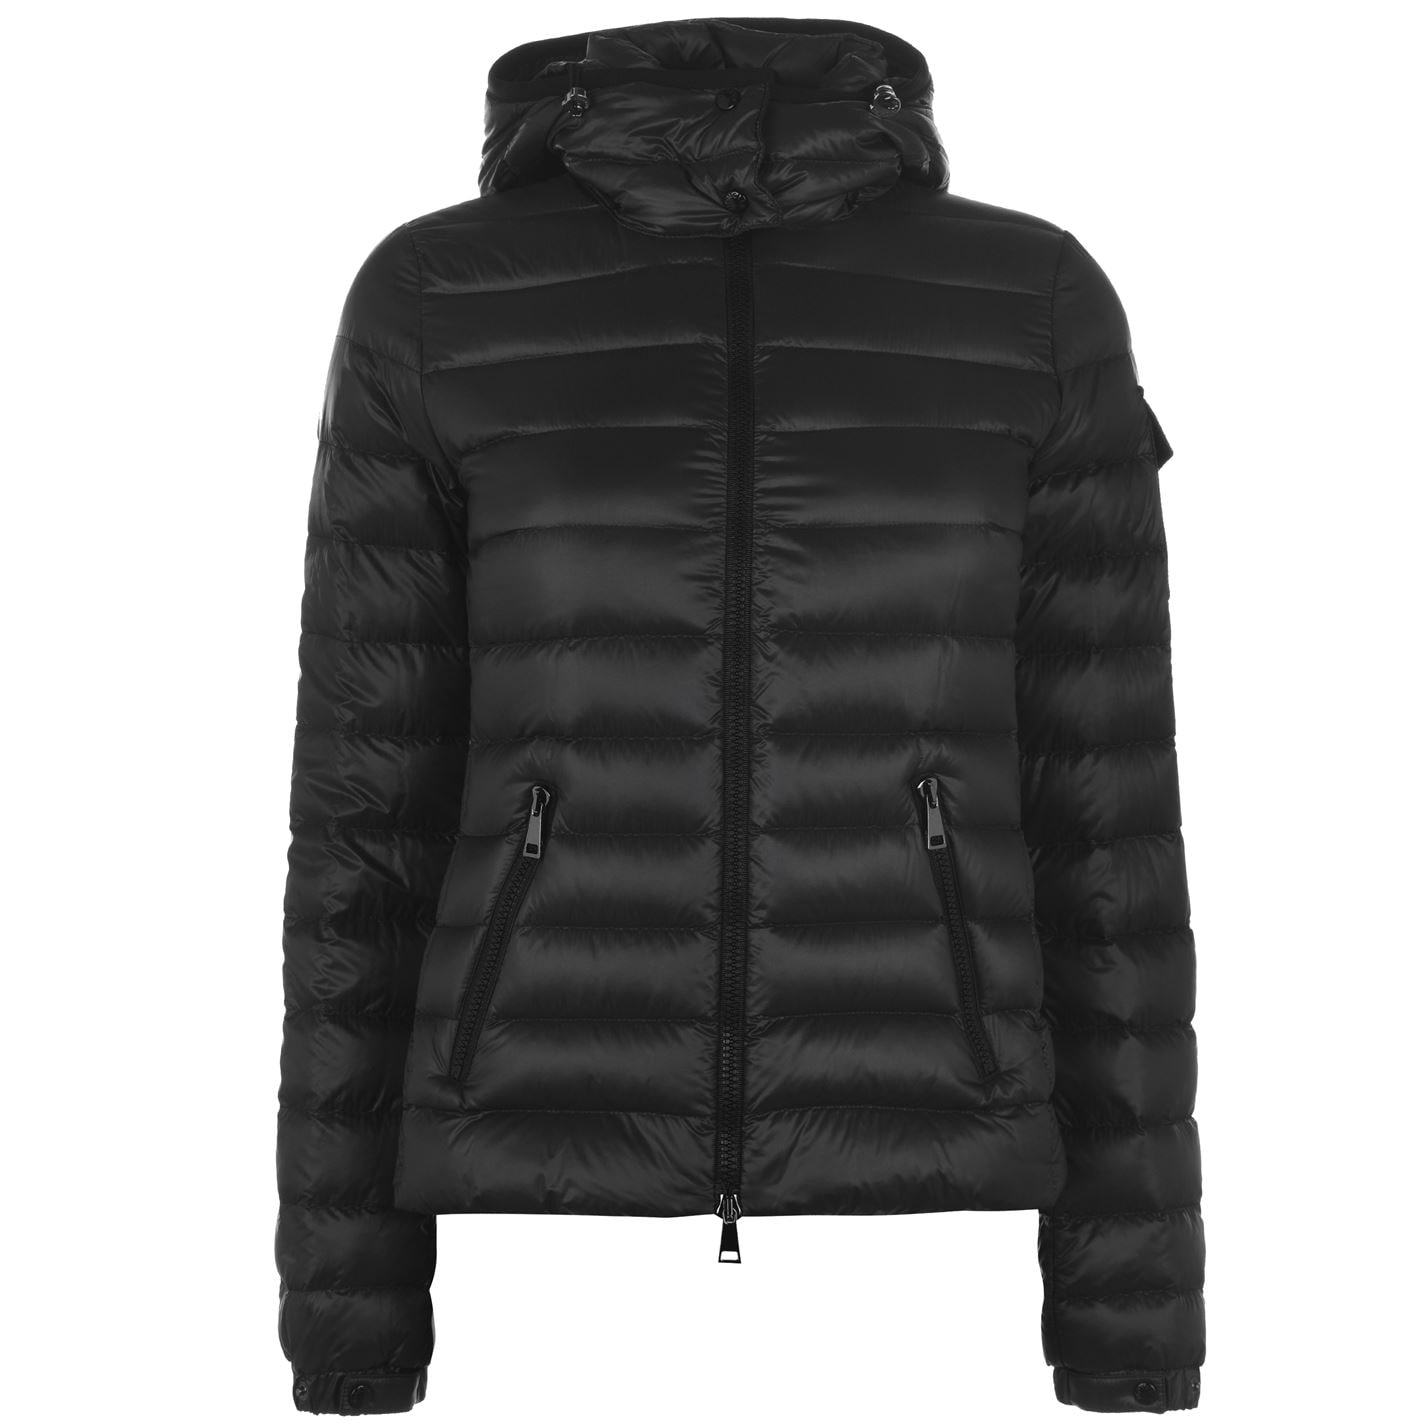 moncler Bleu Jacket Black – high quality cheap moncler jackets